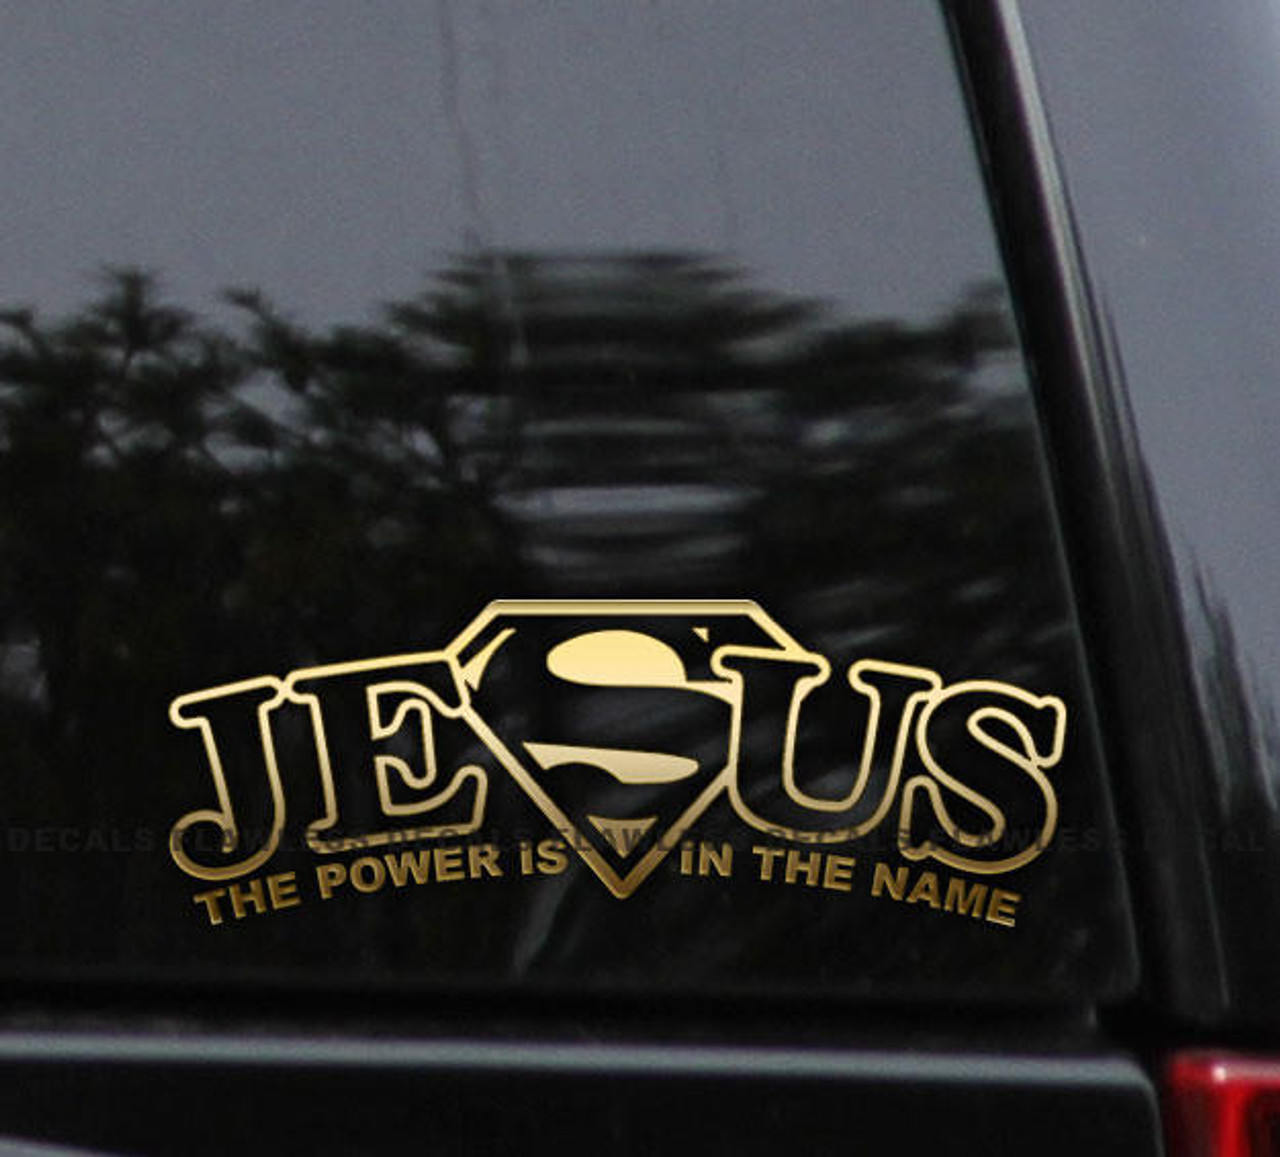 Powered By God Sticker - Religious Stickers